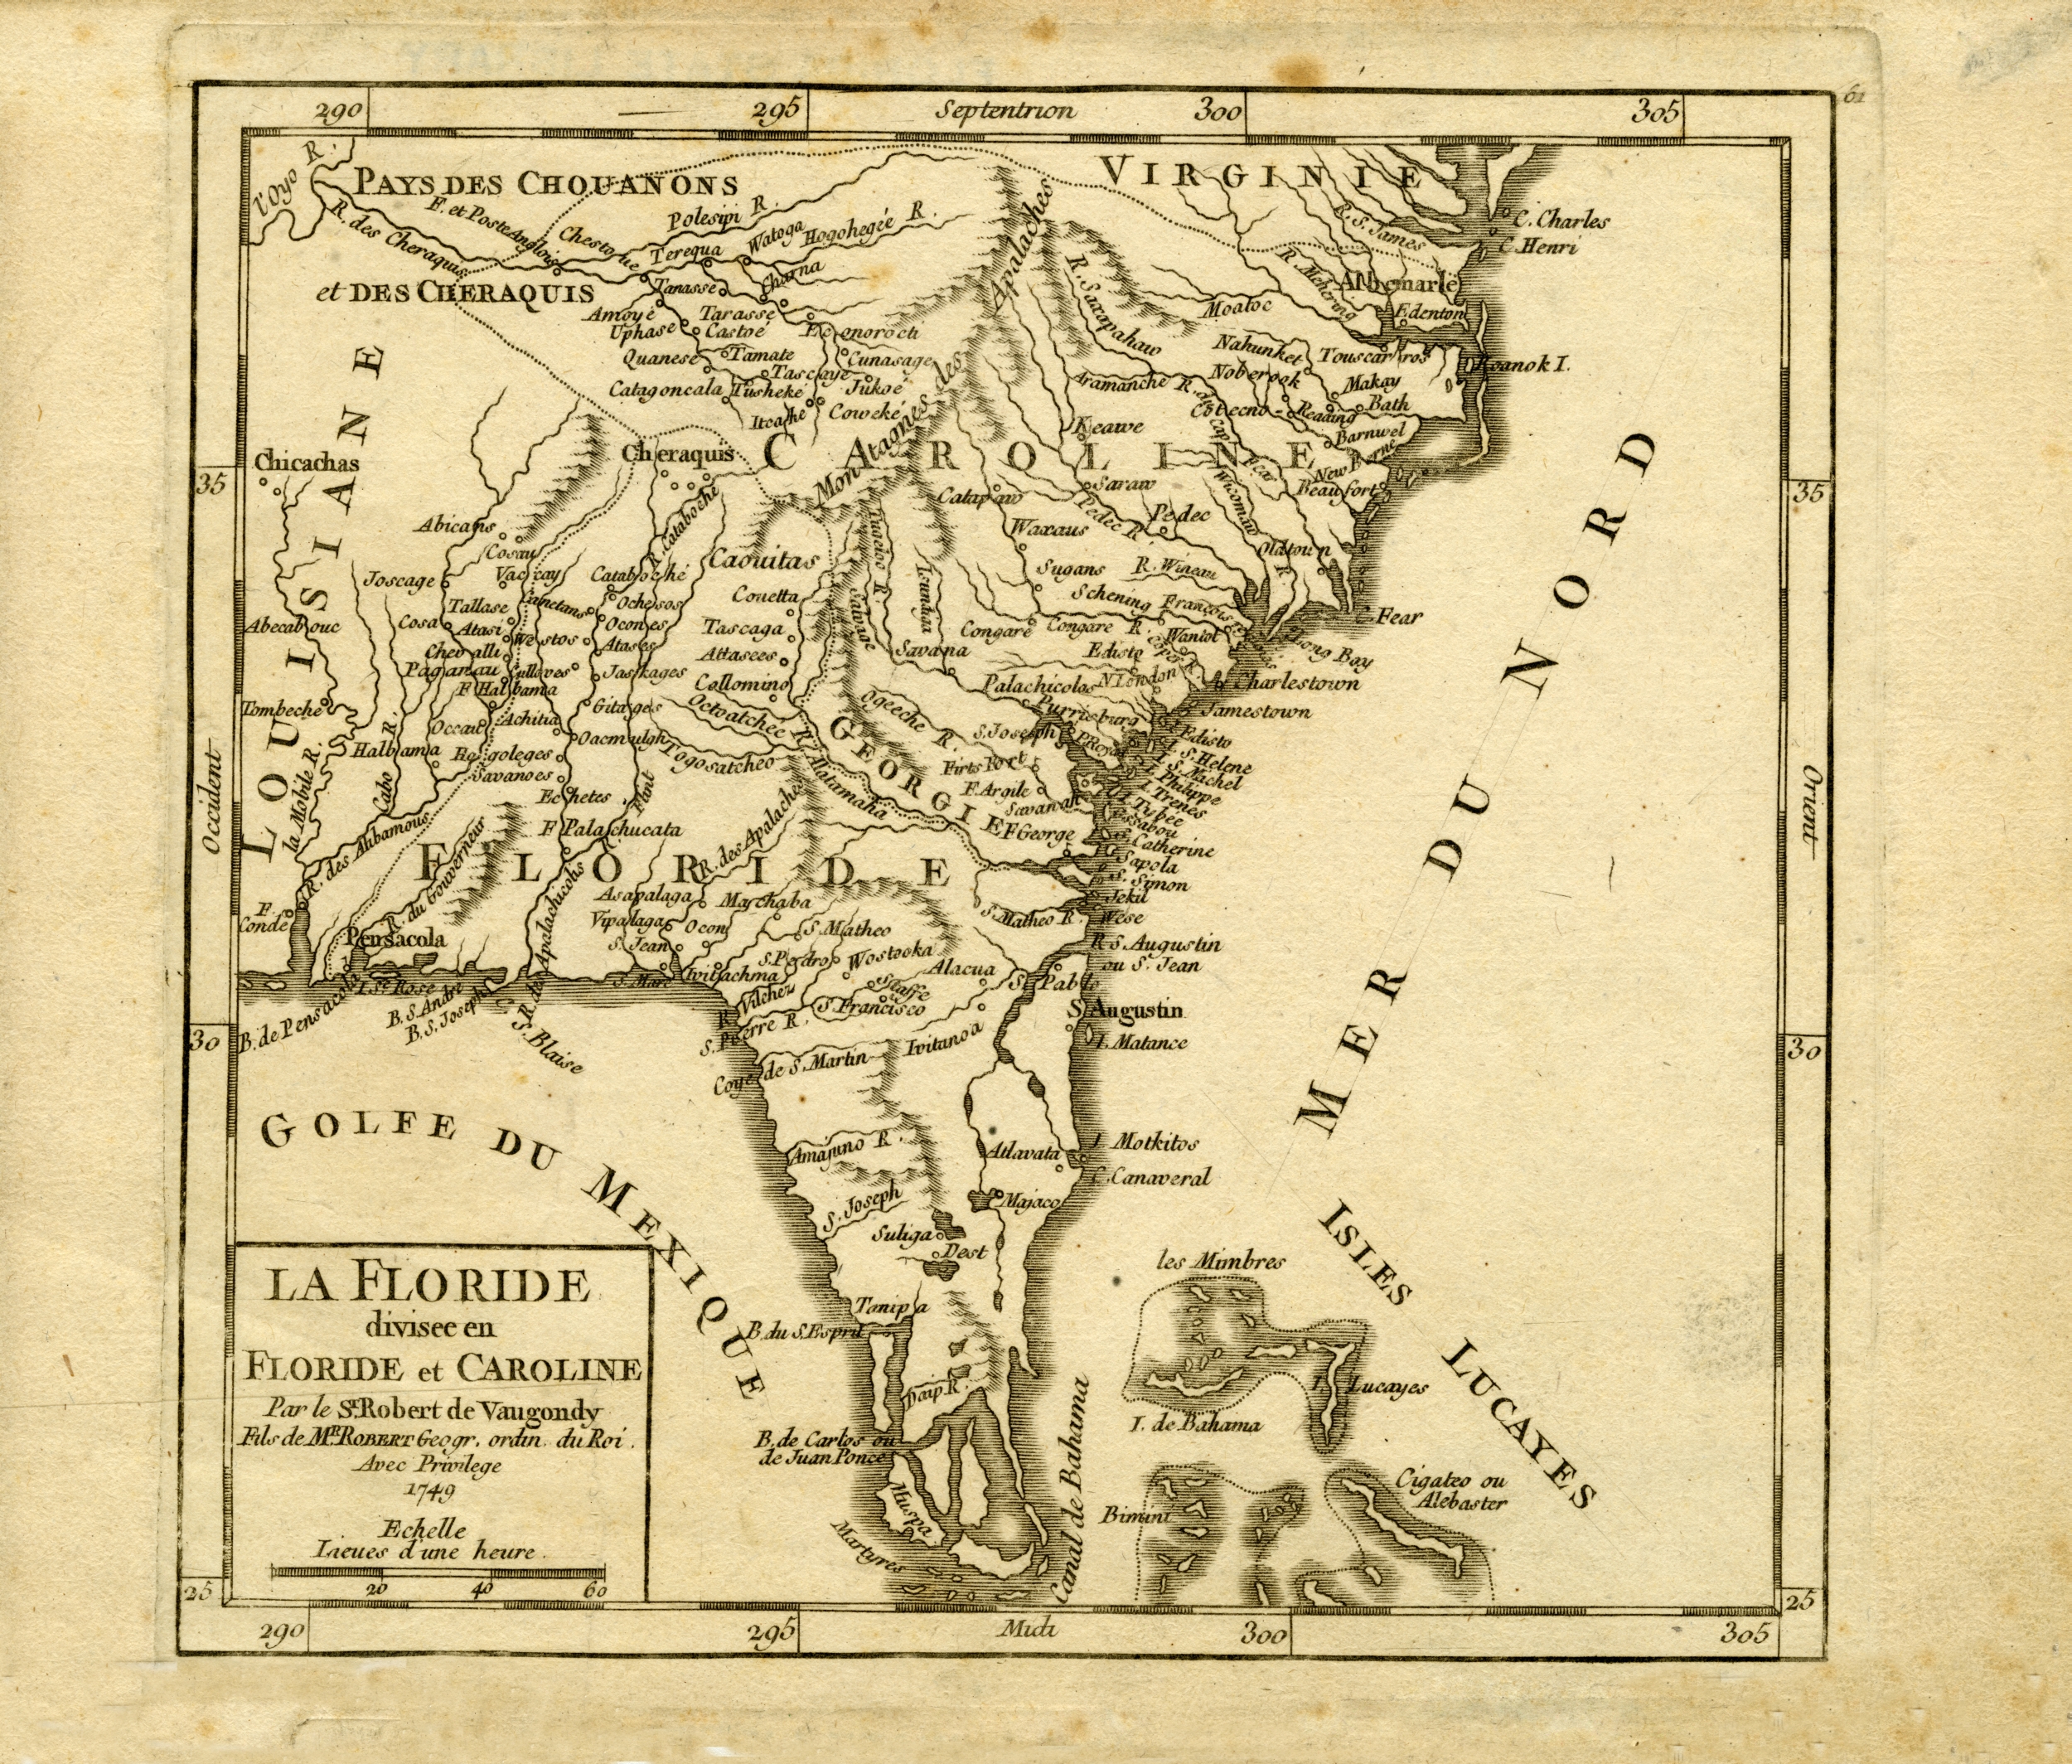 Map of Florida and Carolinas, 1749